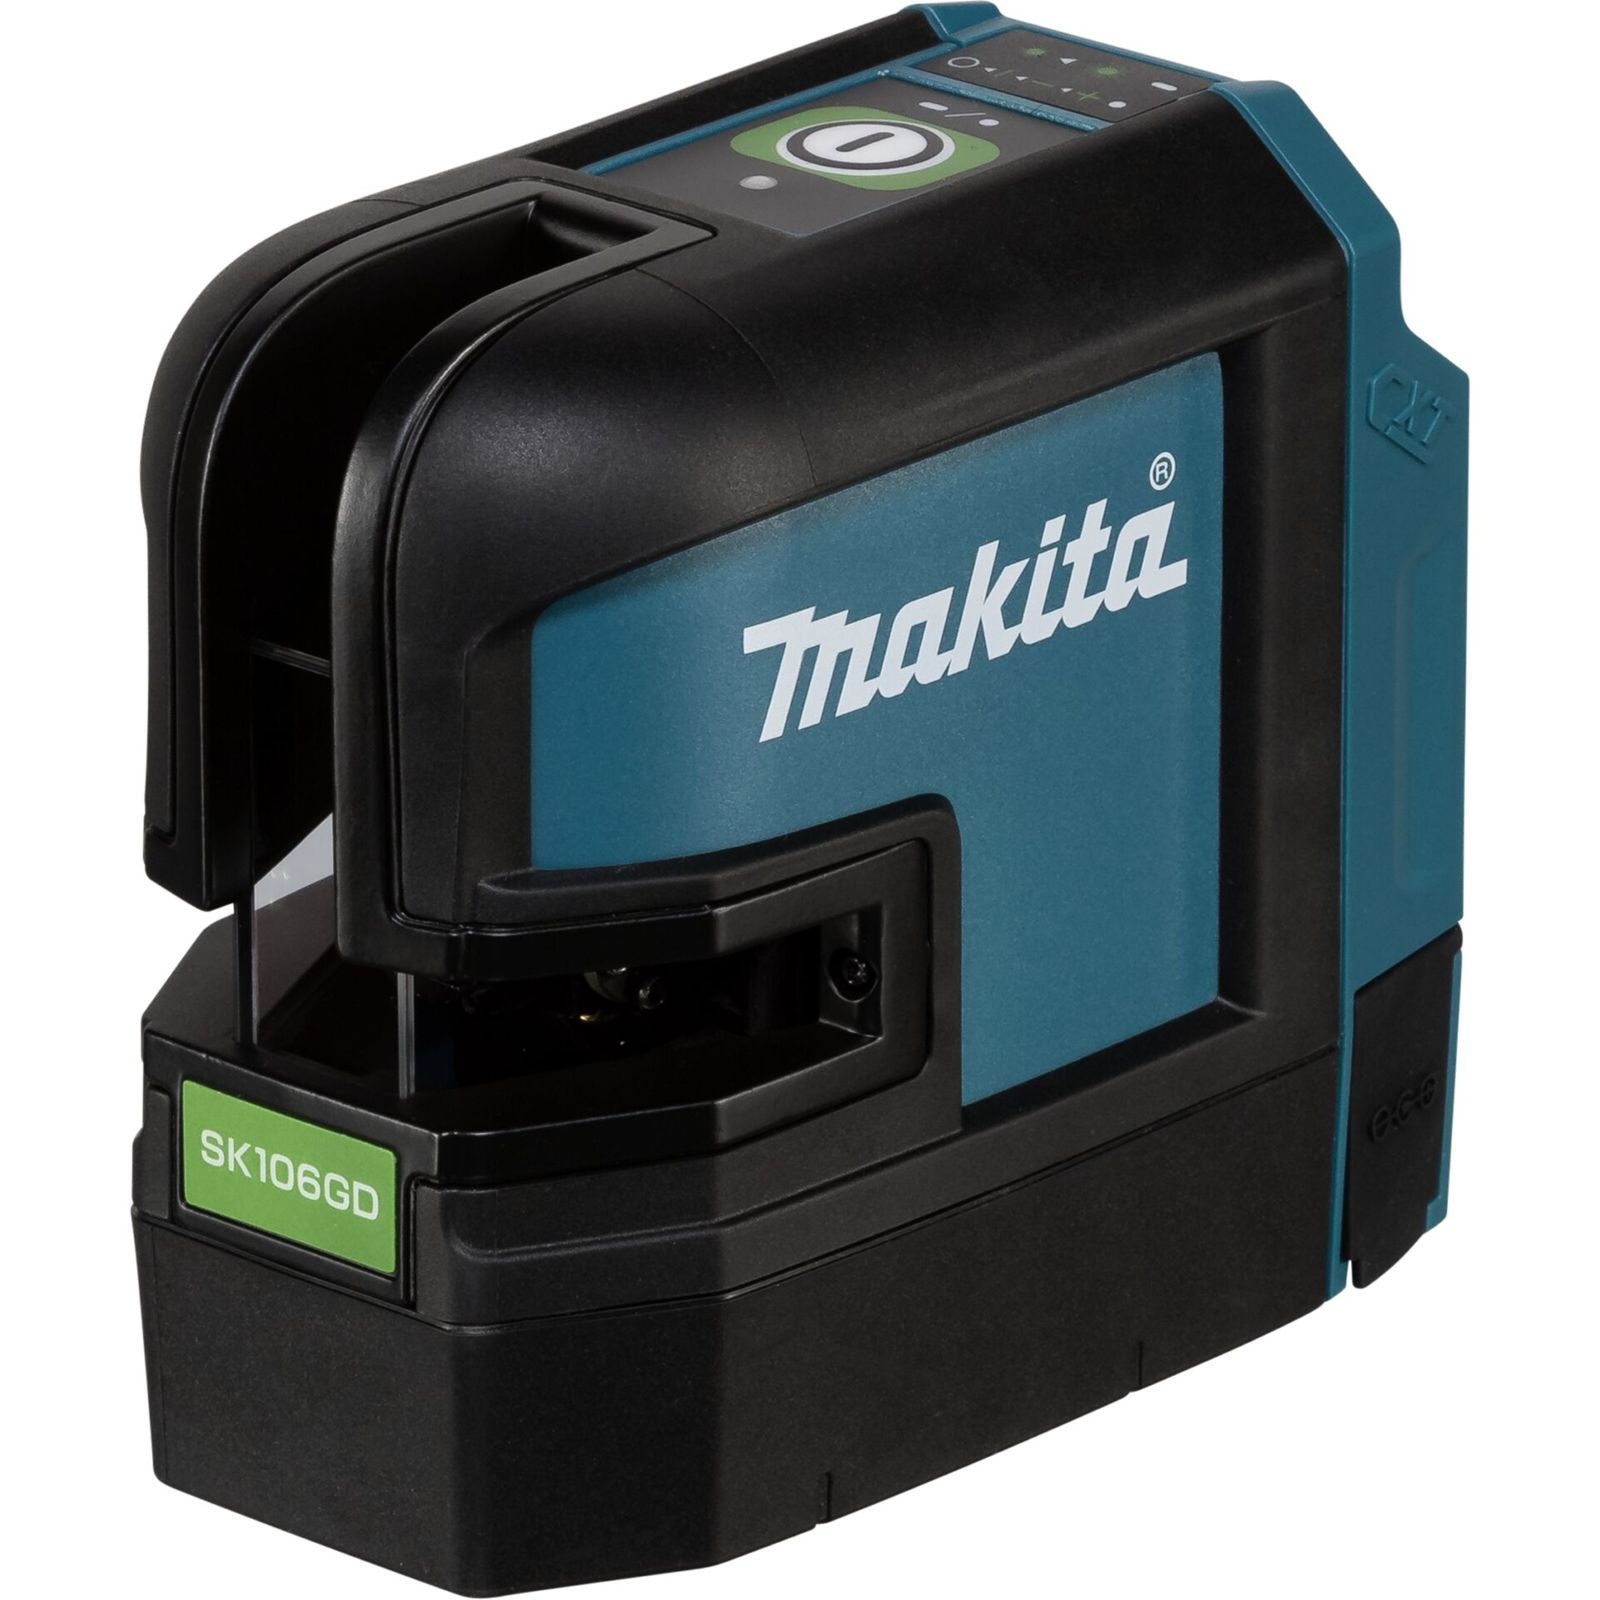 Makita SK106GDZ Cordless Cross Line Laser